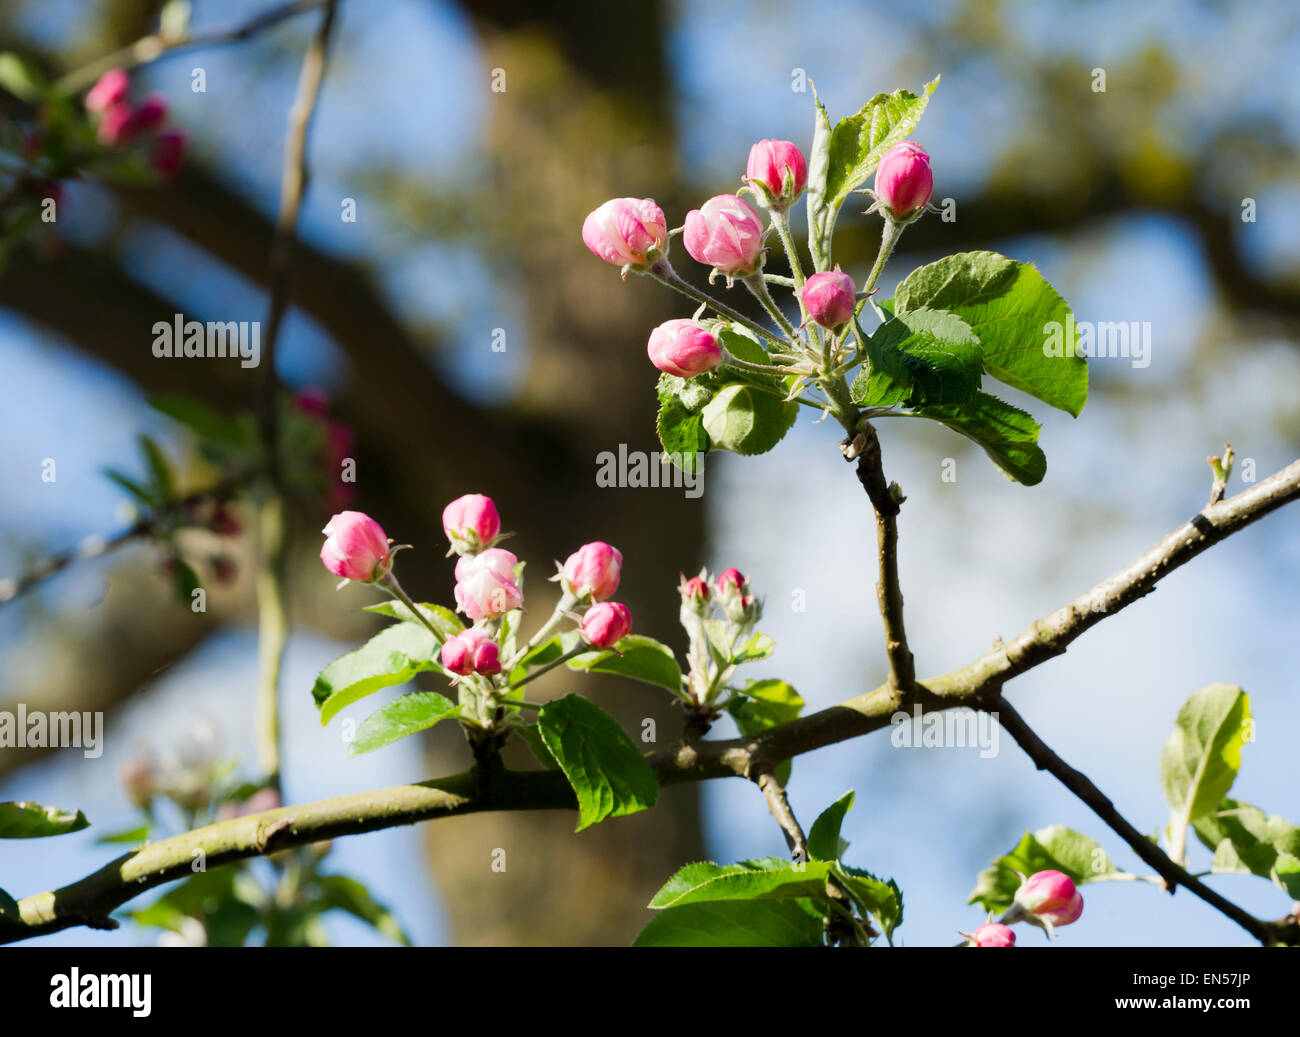 Blossom on an apple tree Stock Photo